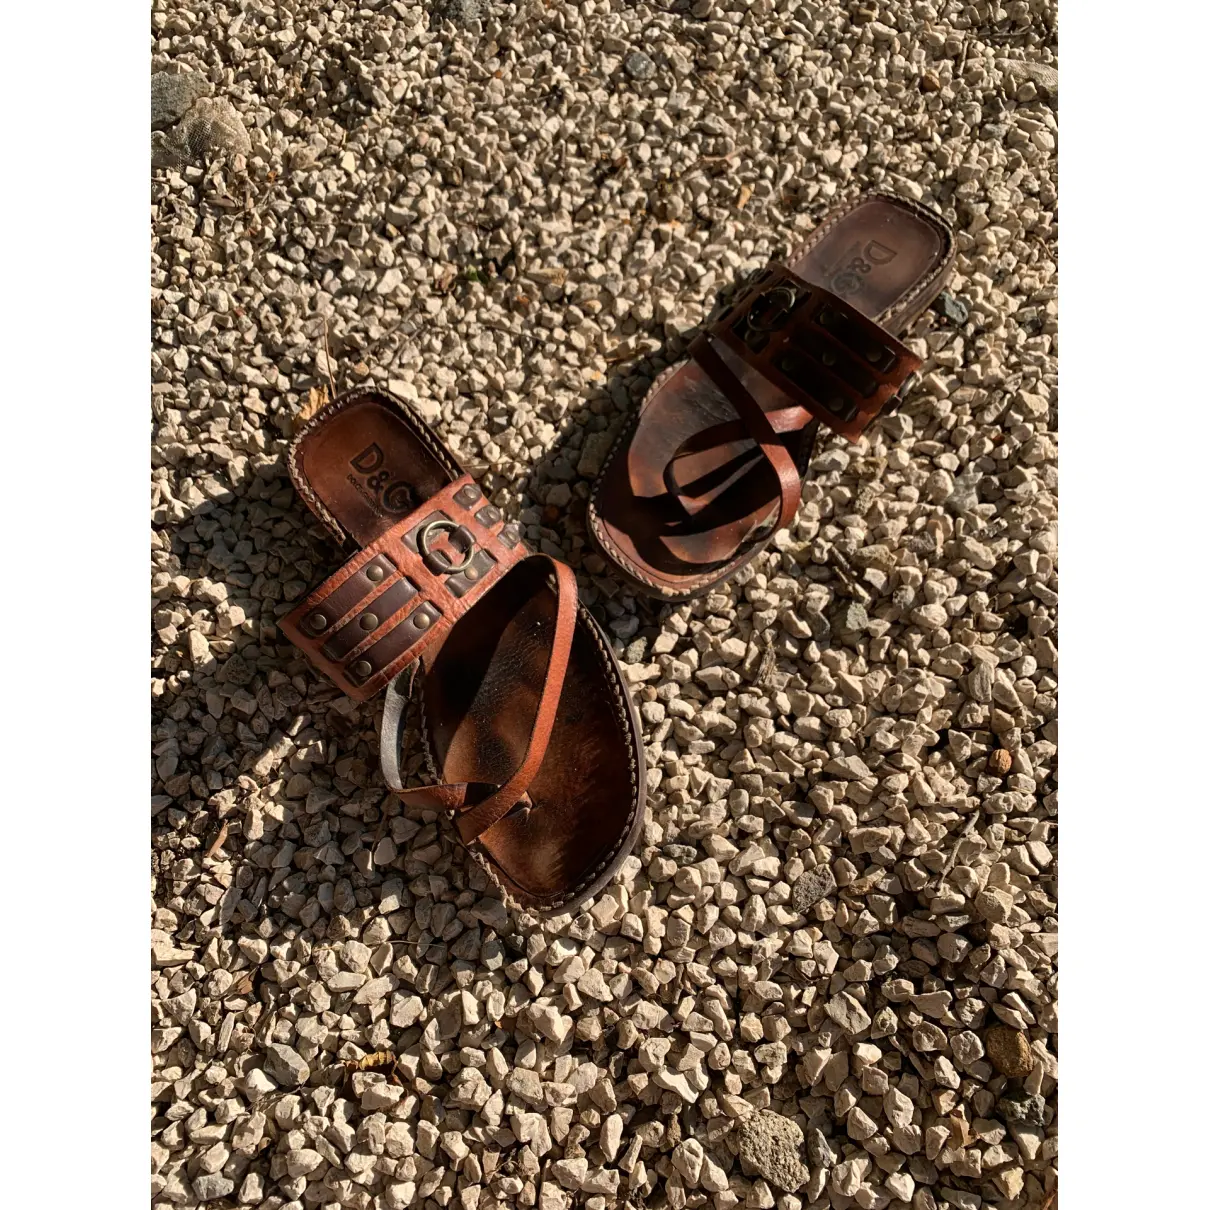 Buy D&G Leather sandal online